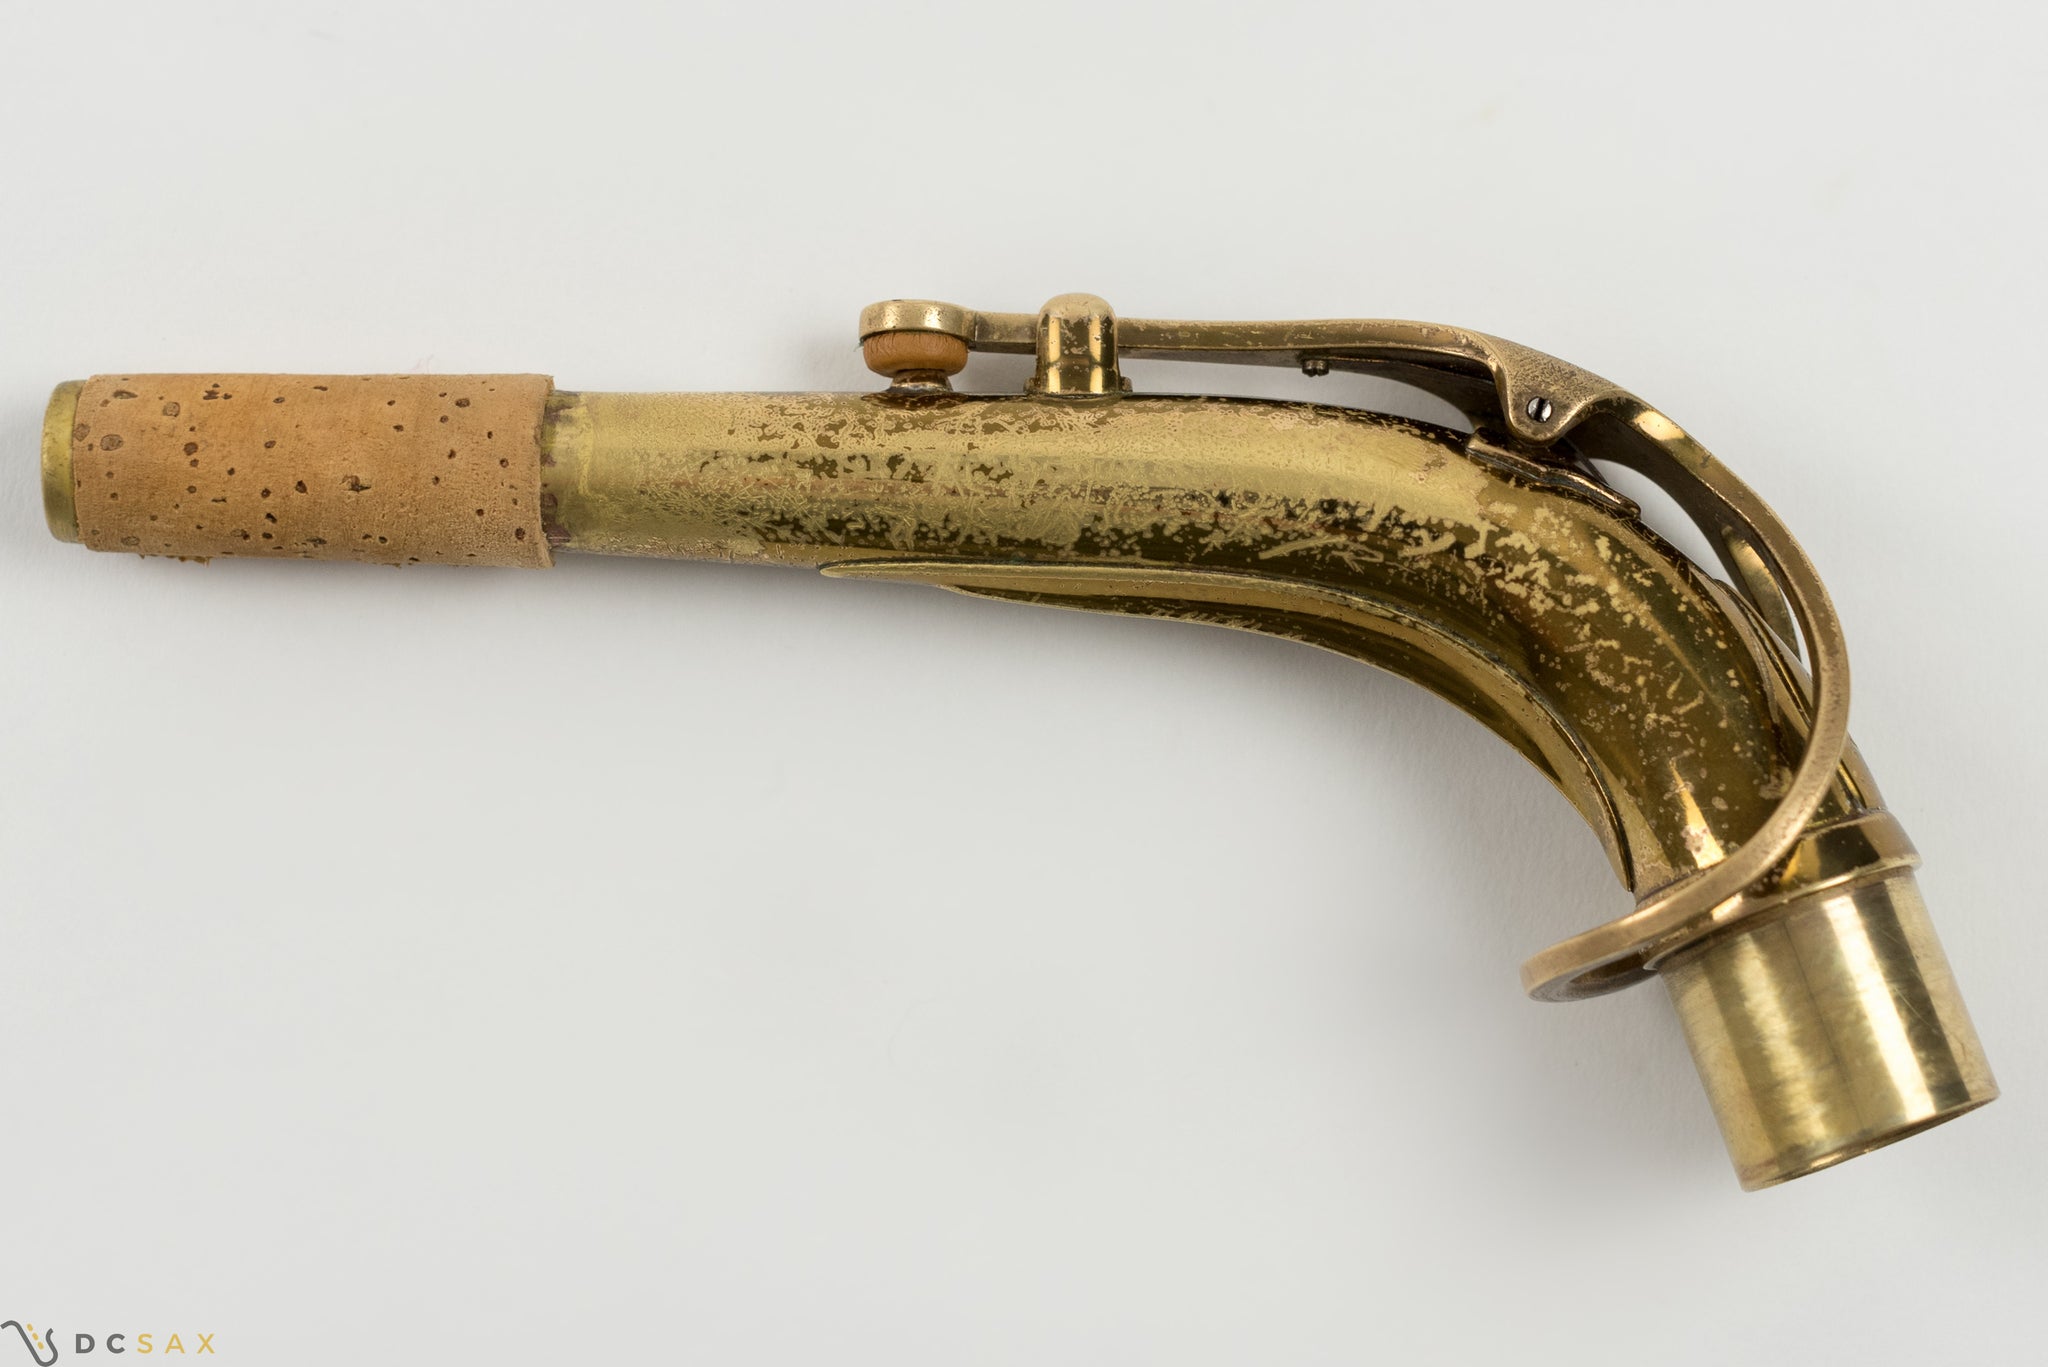 126,xxx Selmer Mark VI Alto Saxophone, 70% Original Lacquer